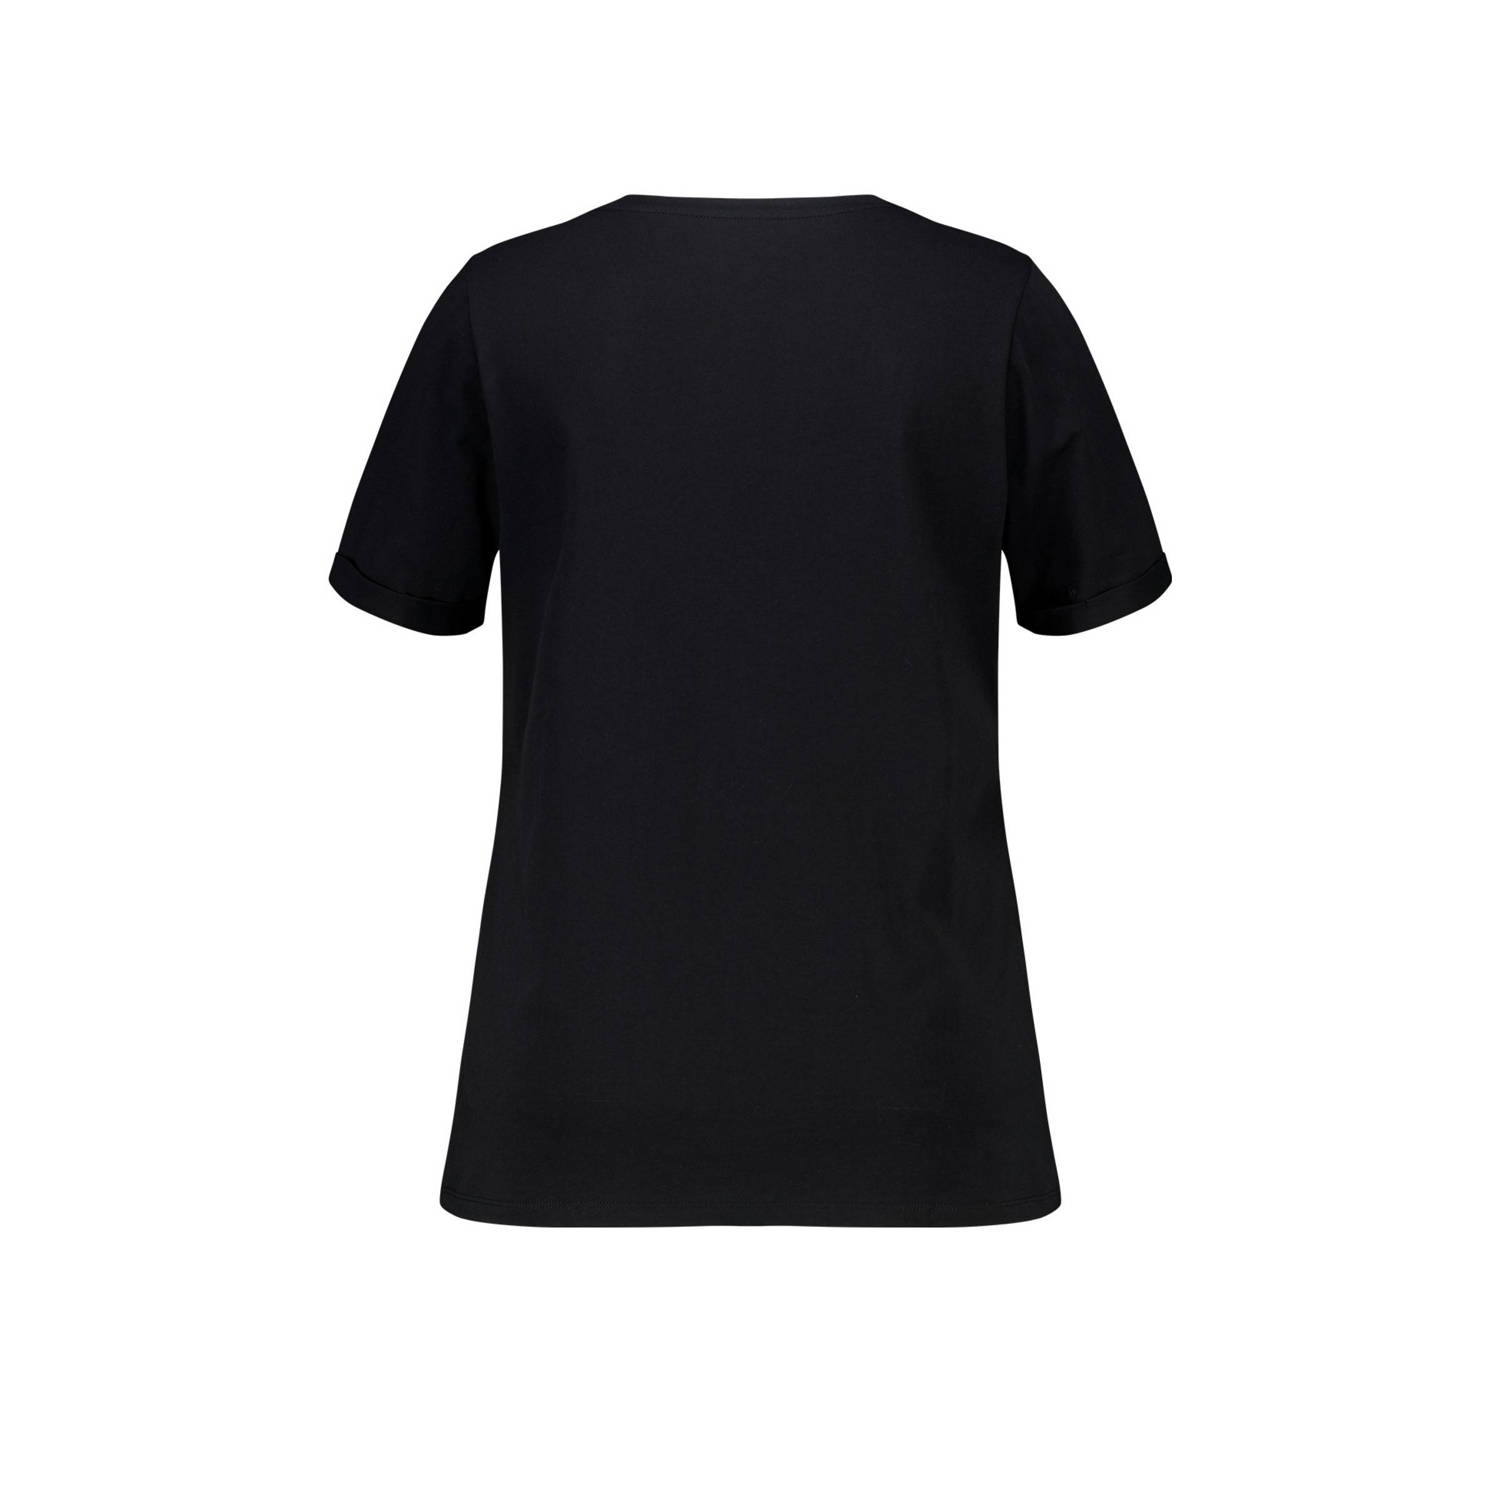 MS Mode T-shirt met printopdruk zwart